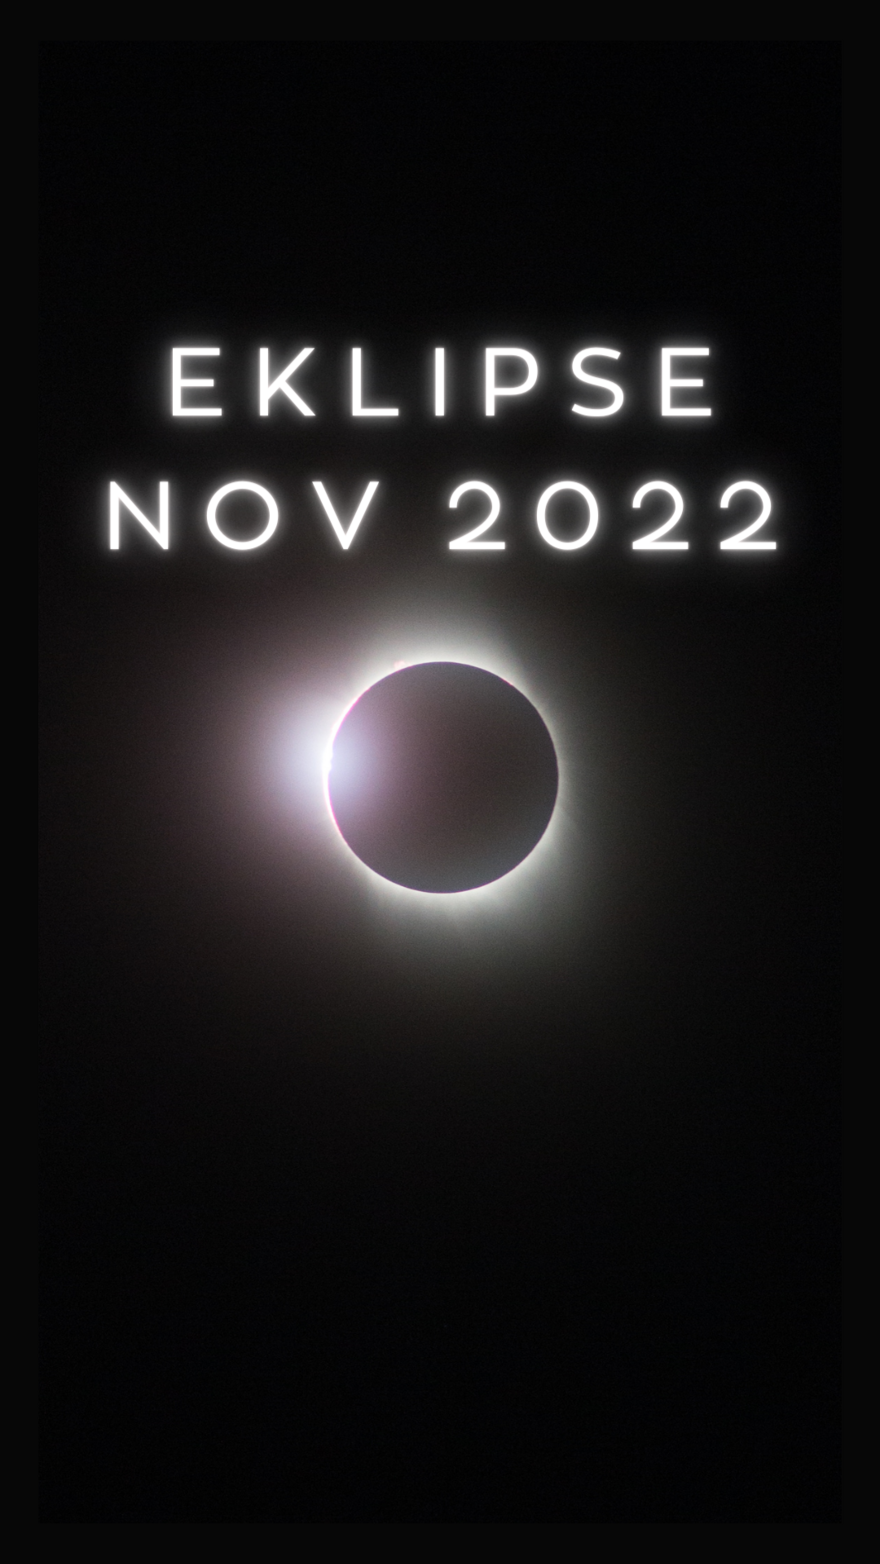 Black White Simple Eclipse Photo Phone Wallpaper